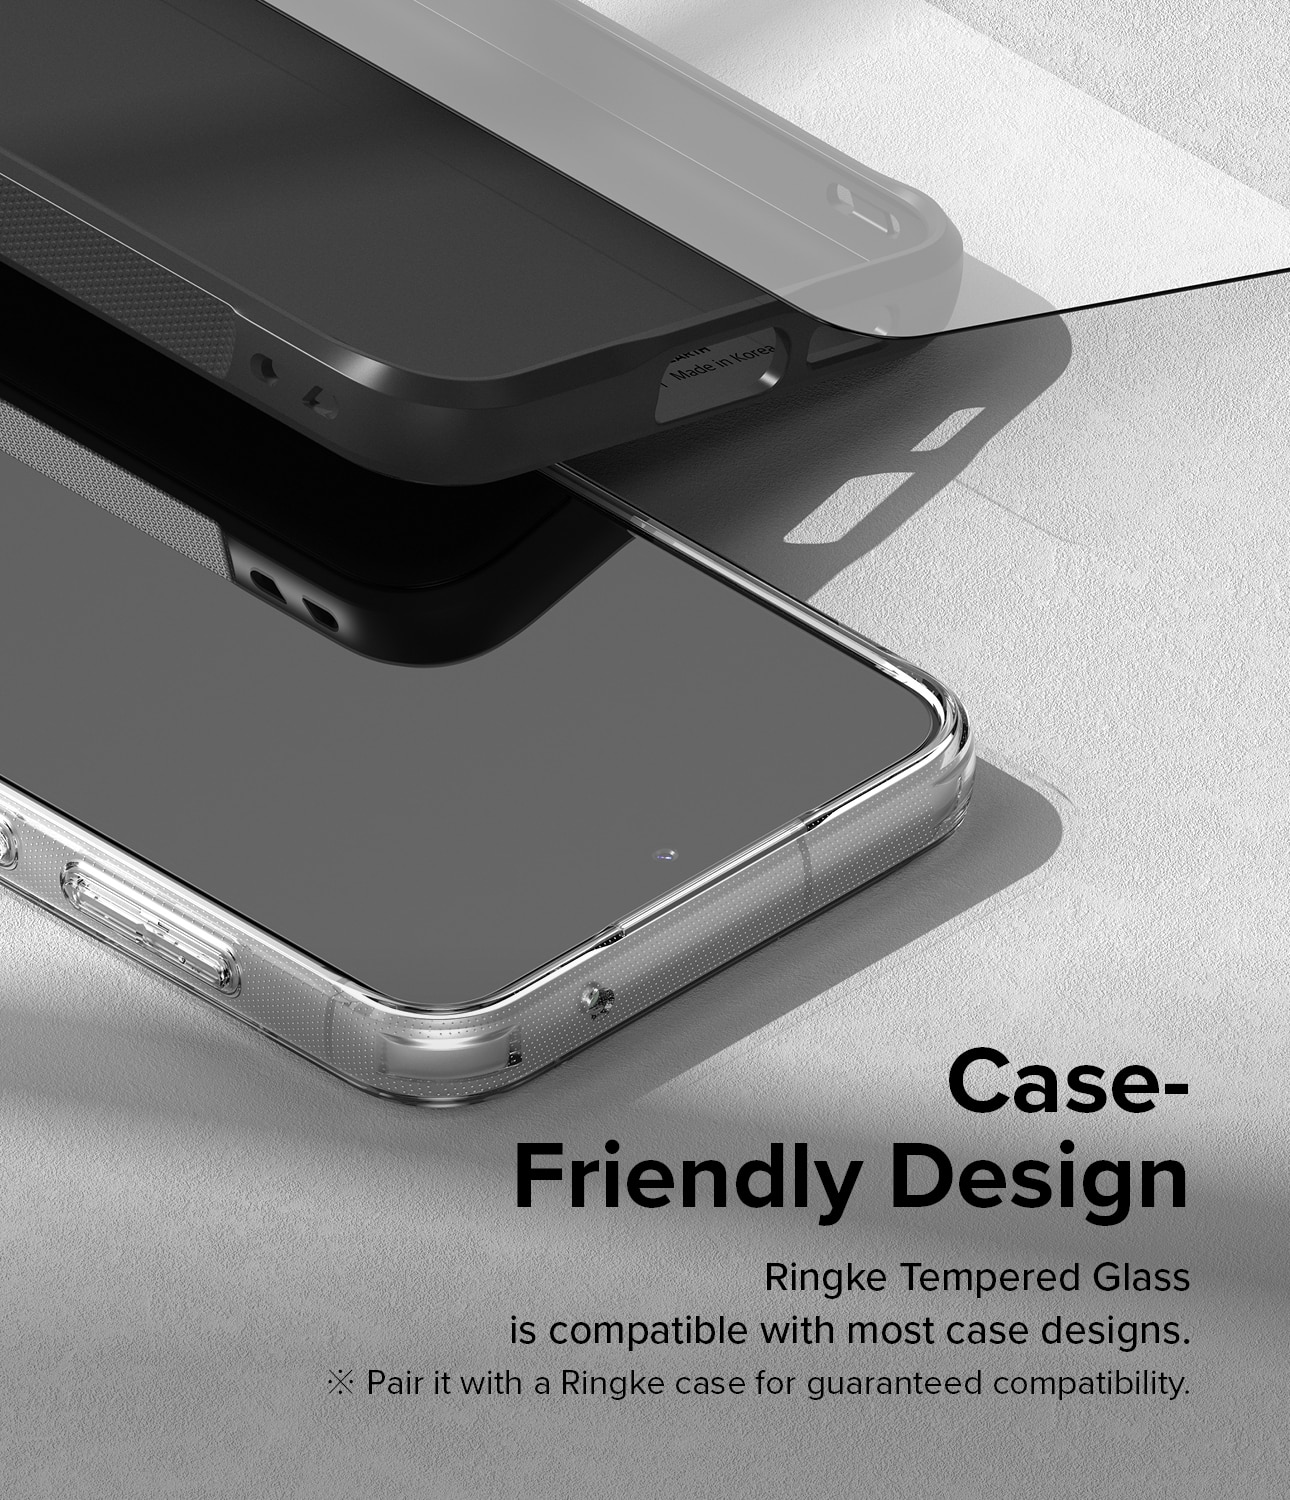 Screen Protector Glass (2 Stück) Samsung Galaxy S23 FE